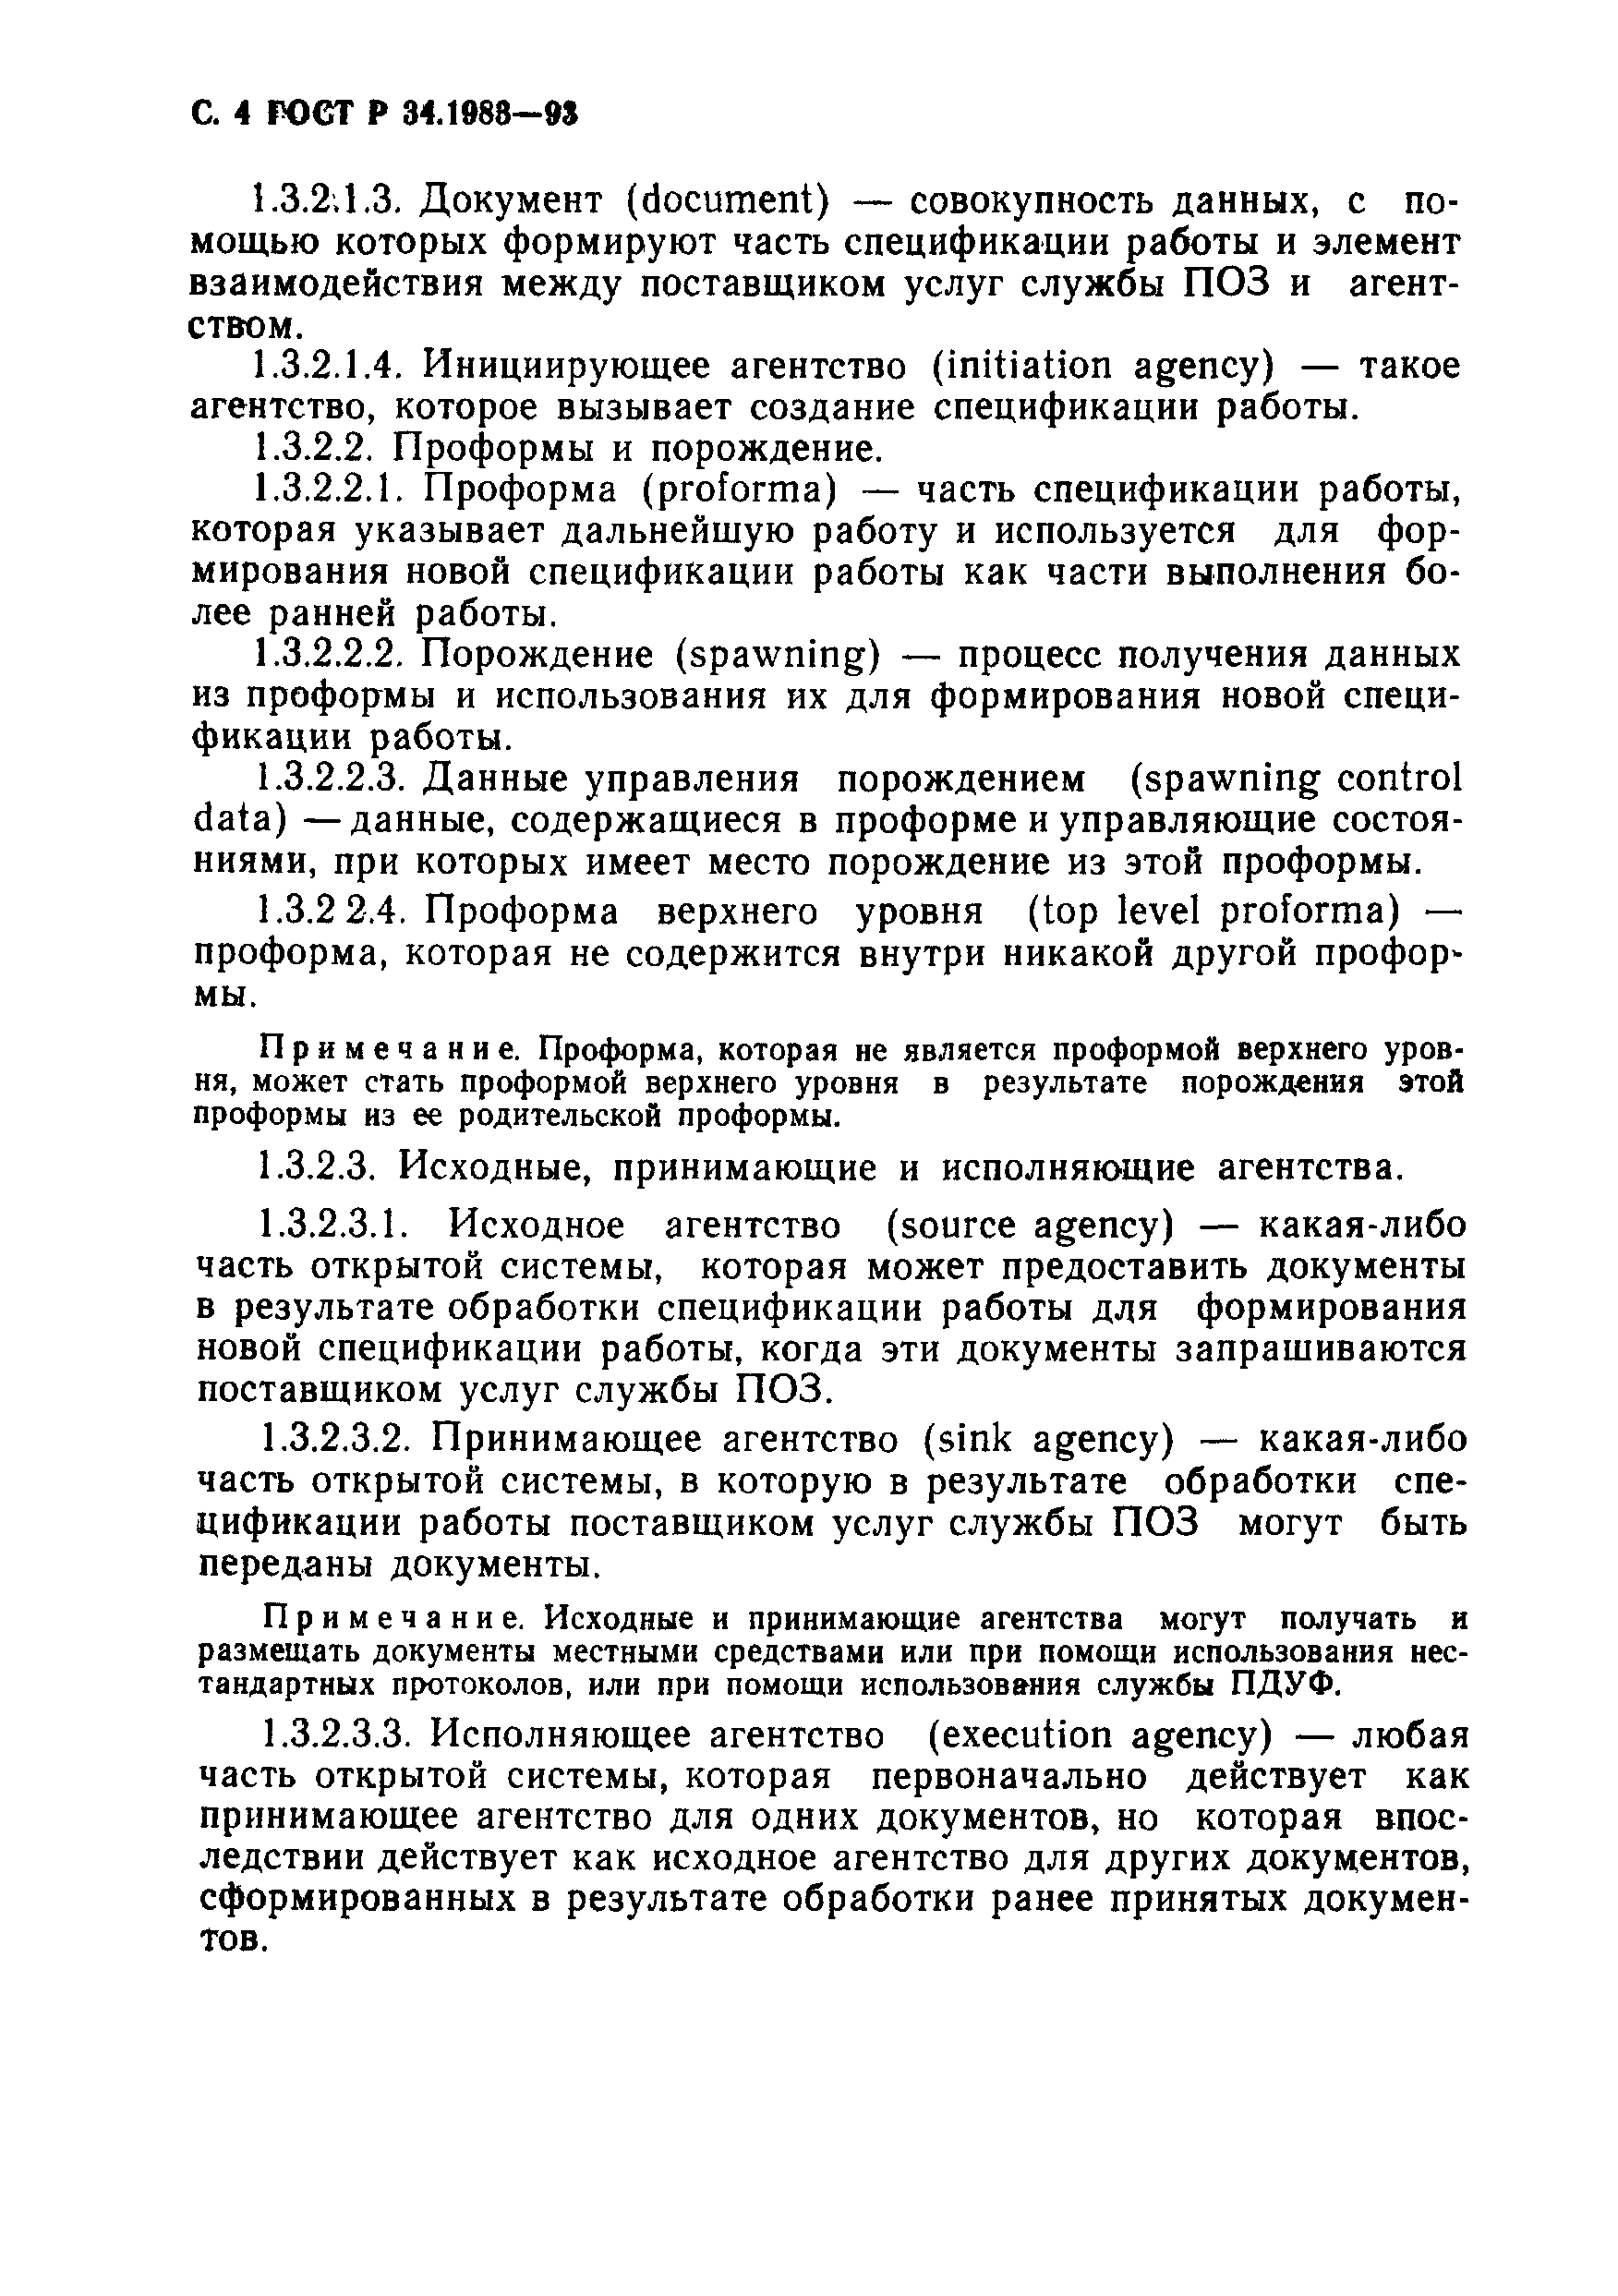 ГОСТ Р 34.1983-93. Страница 5